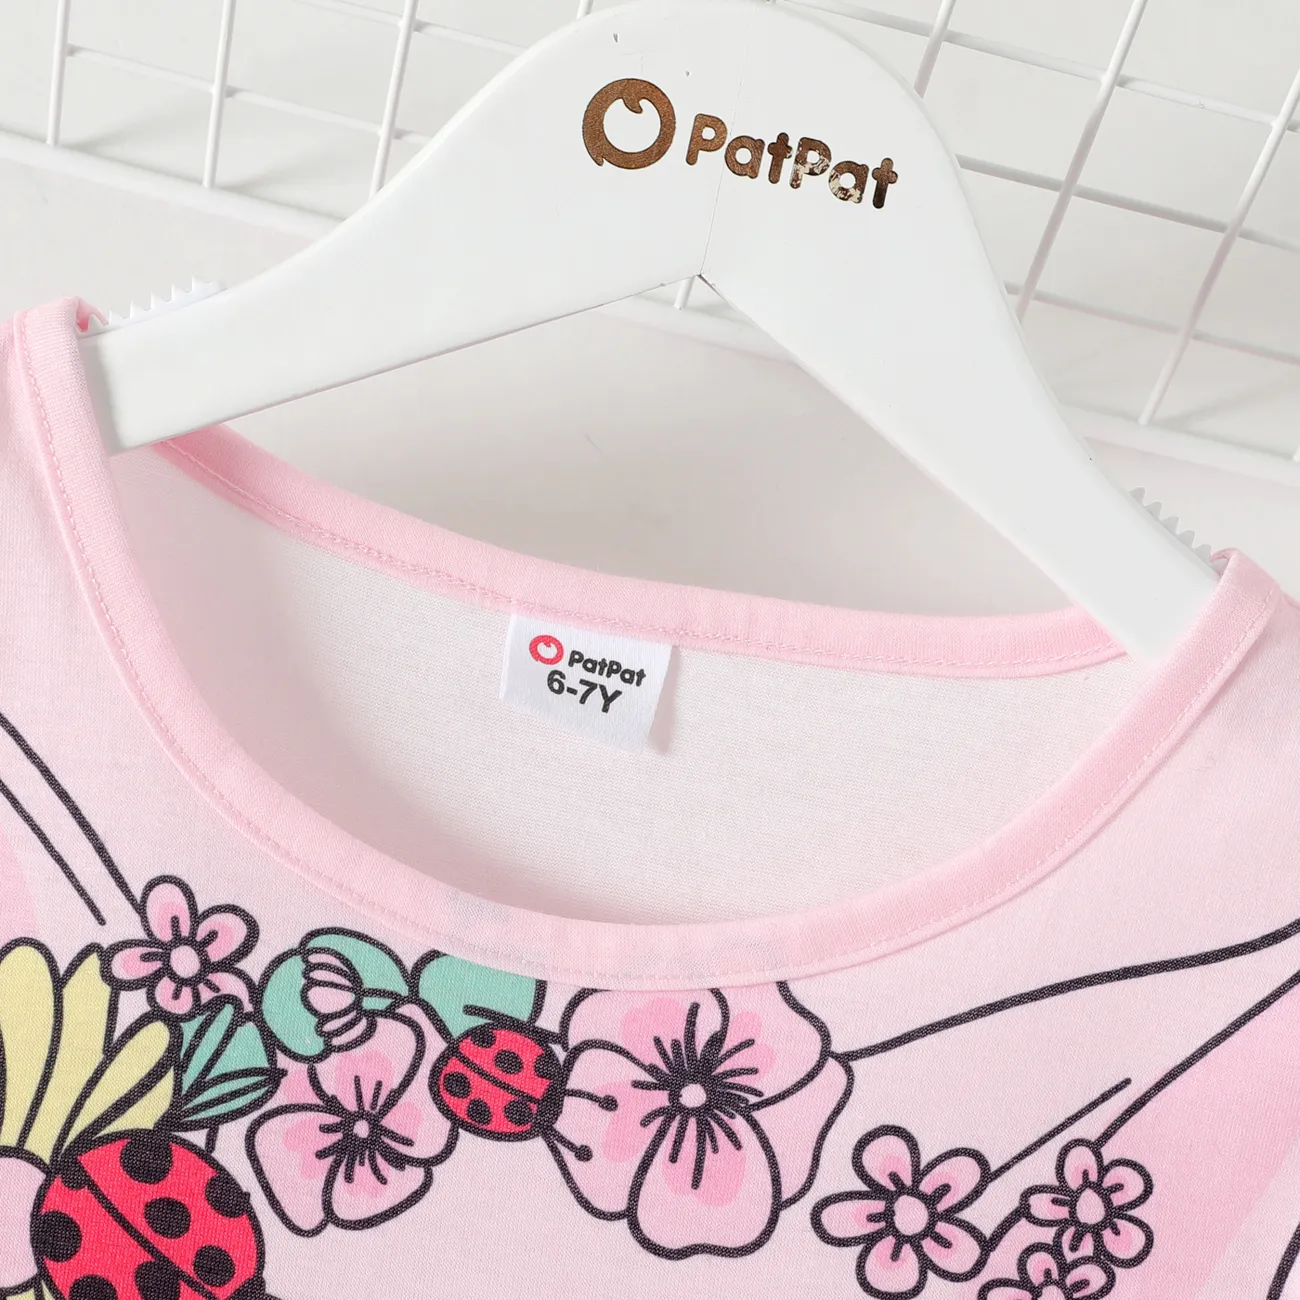 Ostern Kinder Mädchen Tierbild Kurzärmelig T-Shirts rosa big image 1